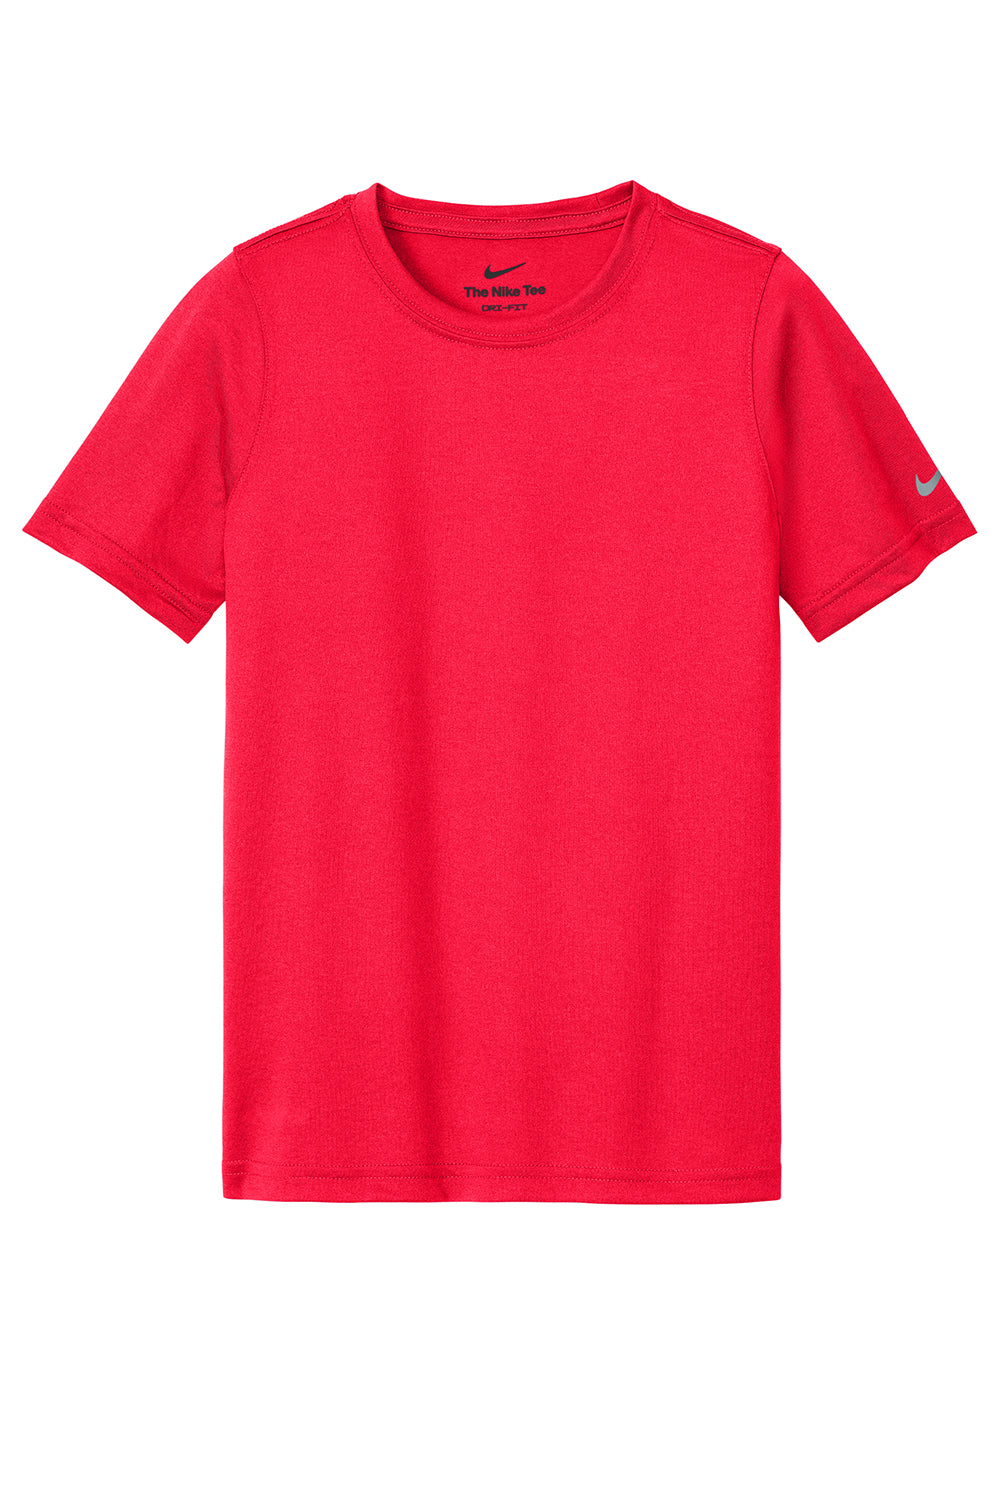 Nike NKDX8787 Youth rLegend Dri-Fit Moisture Wicking Short Sleeve Crewneck T-Shirt University Red Flat Front